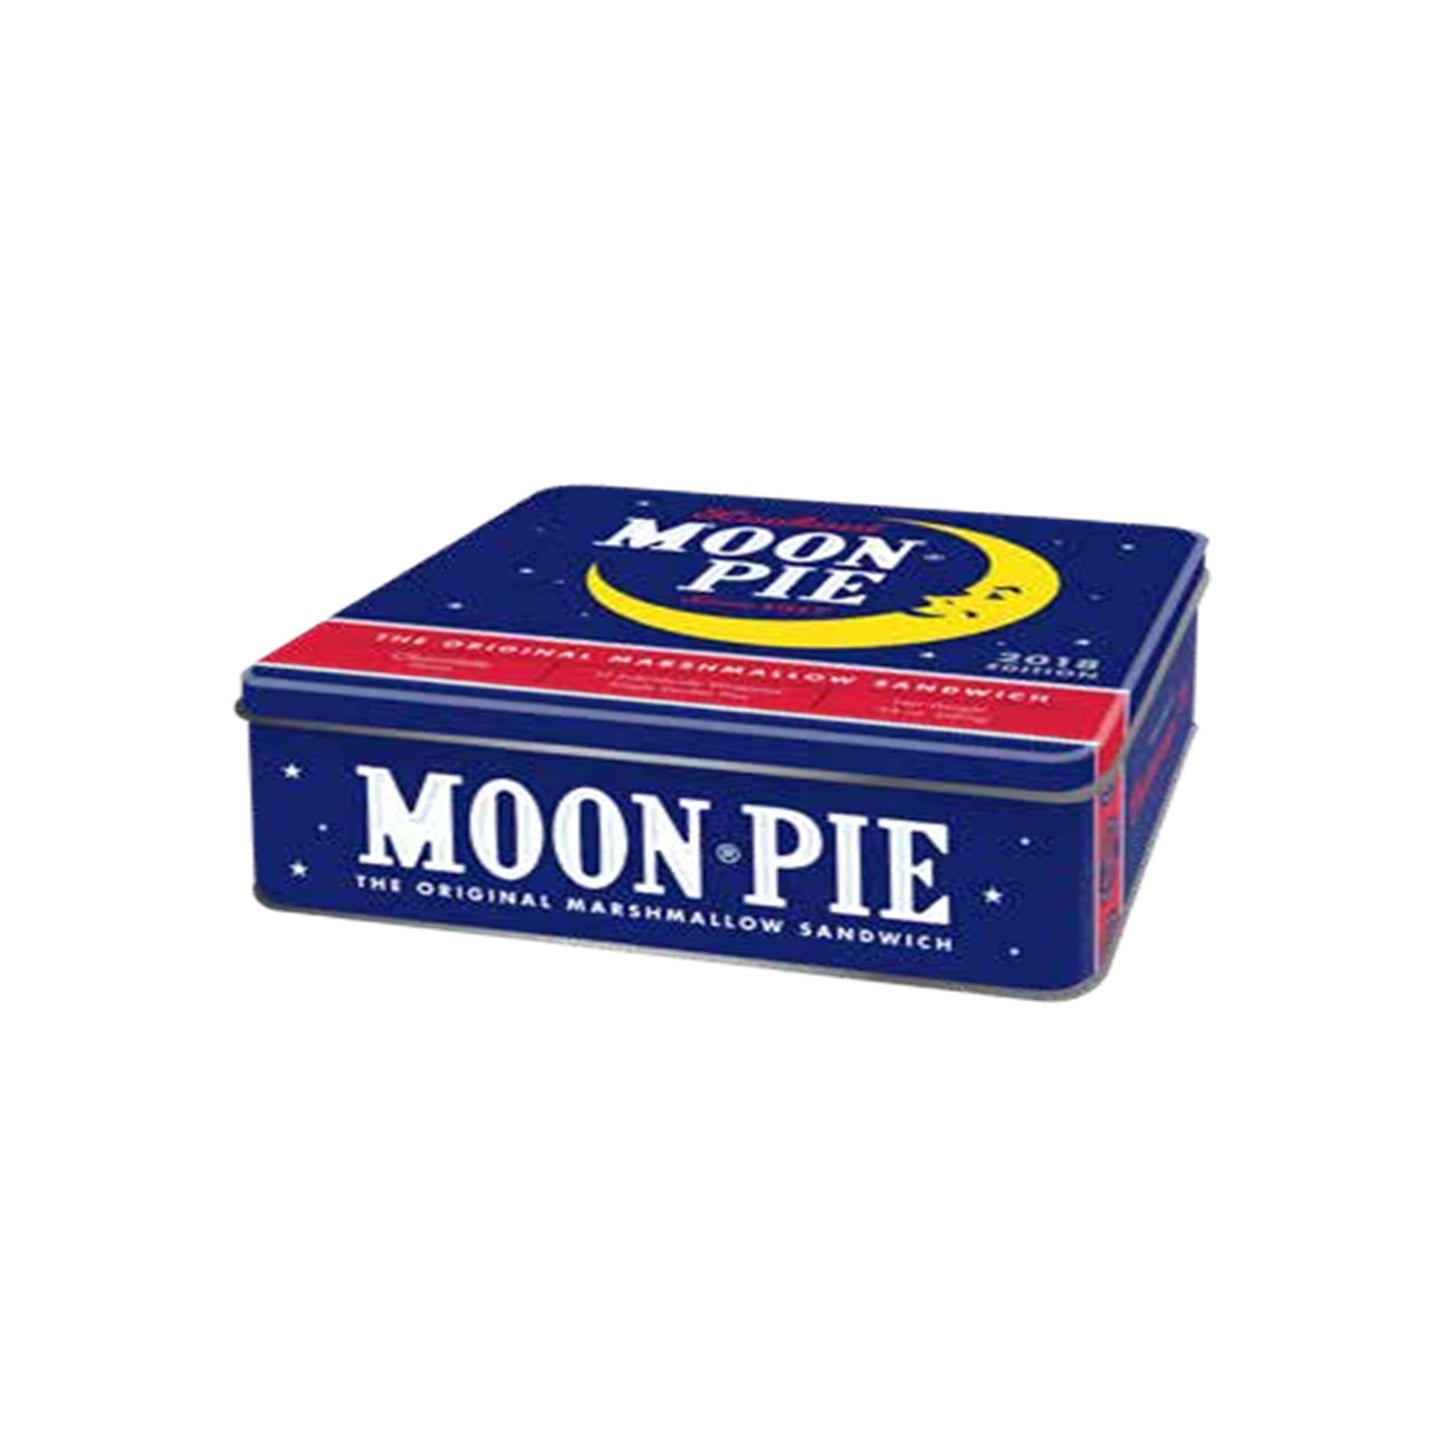 MoonPie Collector Tin, The Original Marshmallow Sandwich